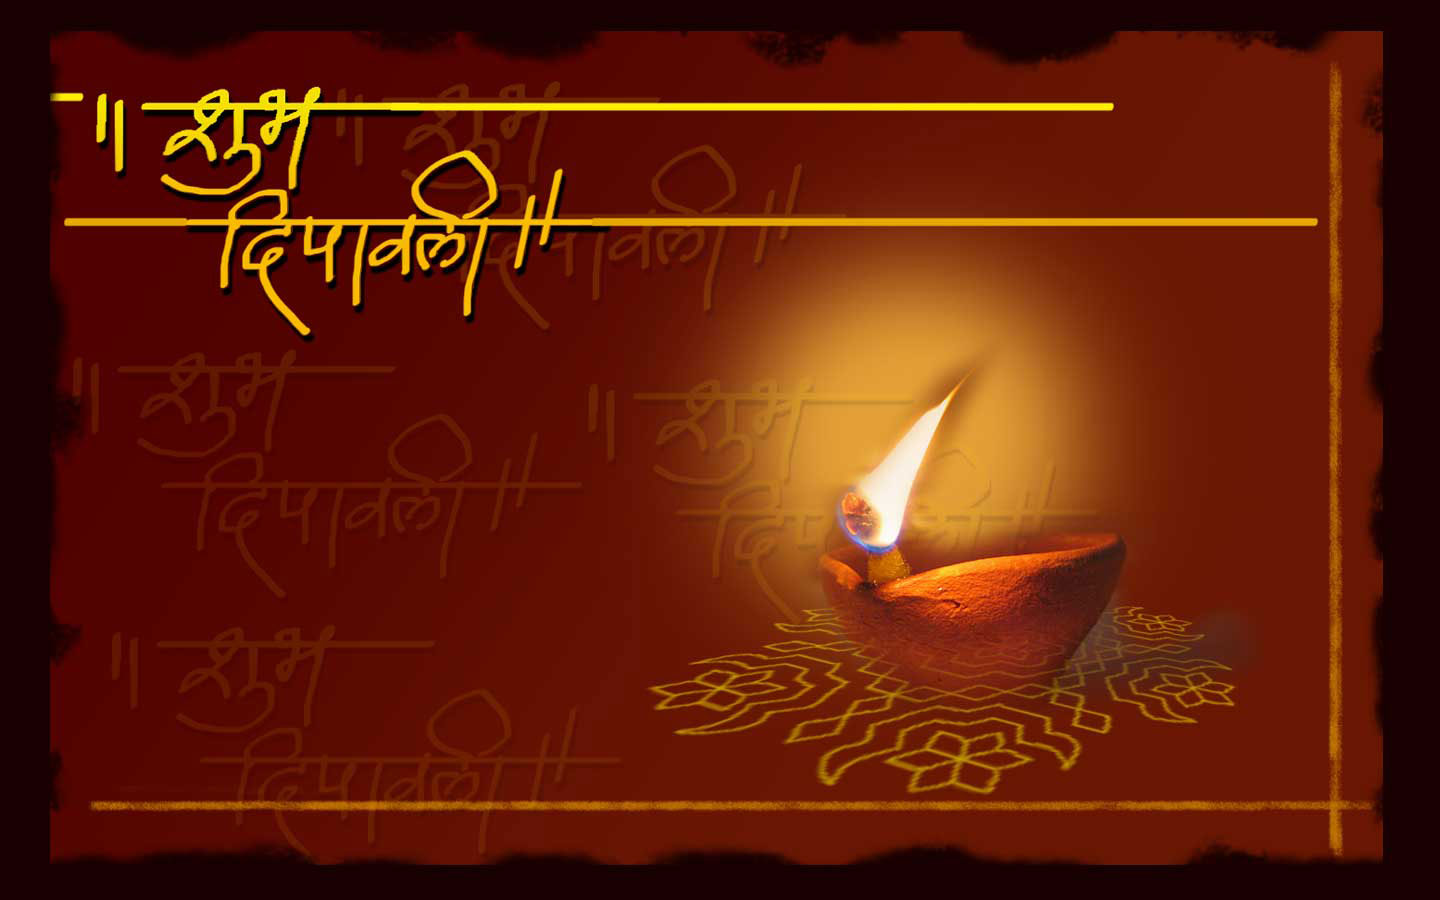 Happy Diwali / Deepavali Images & Pictures For Facebook